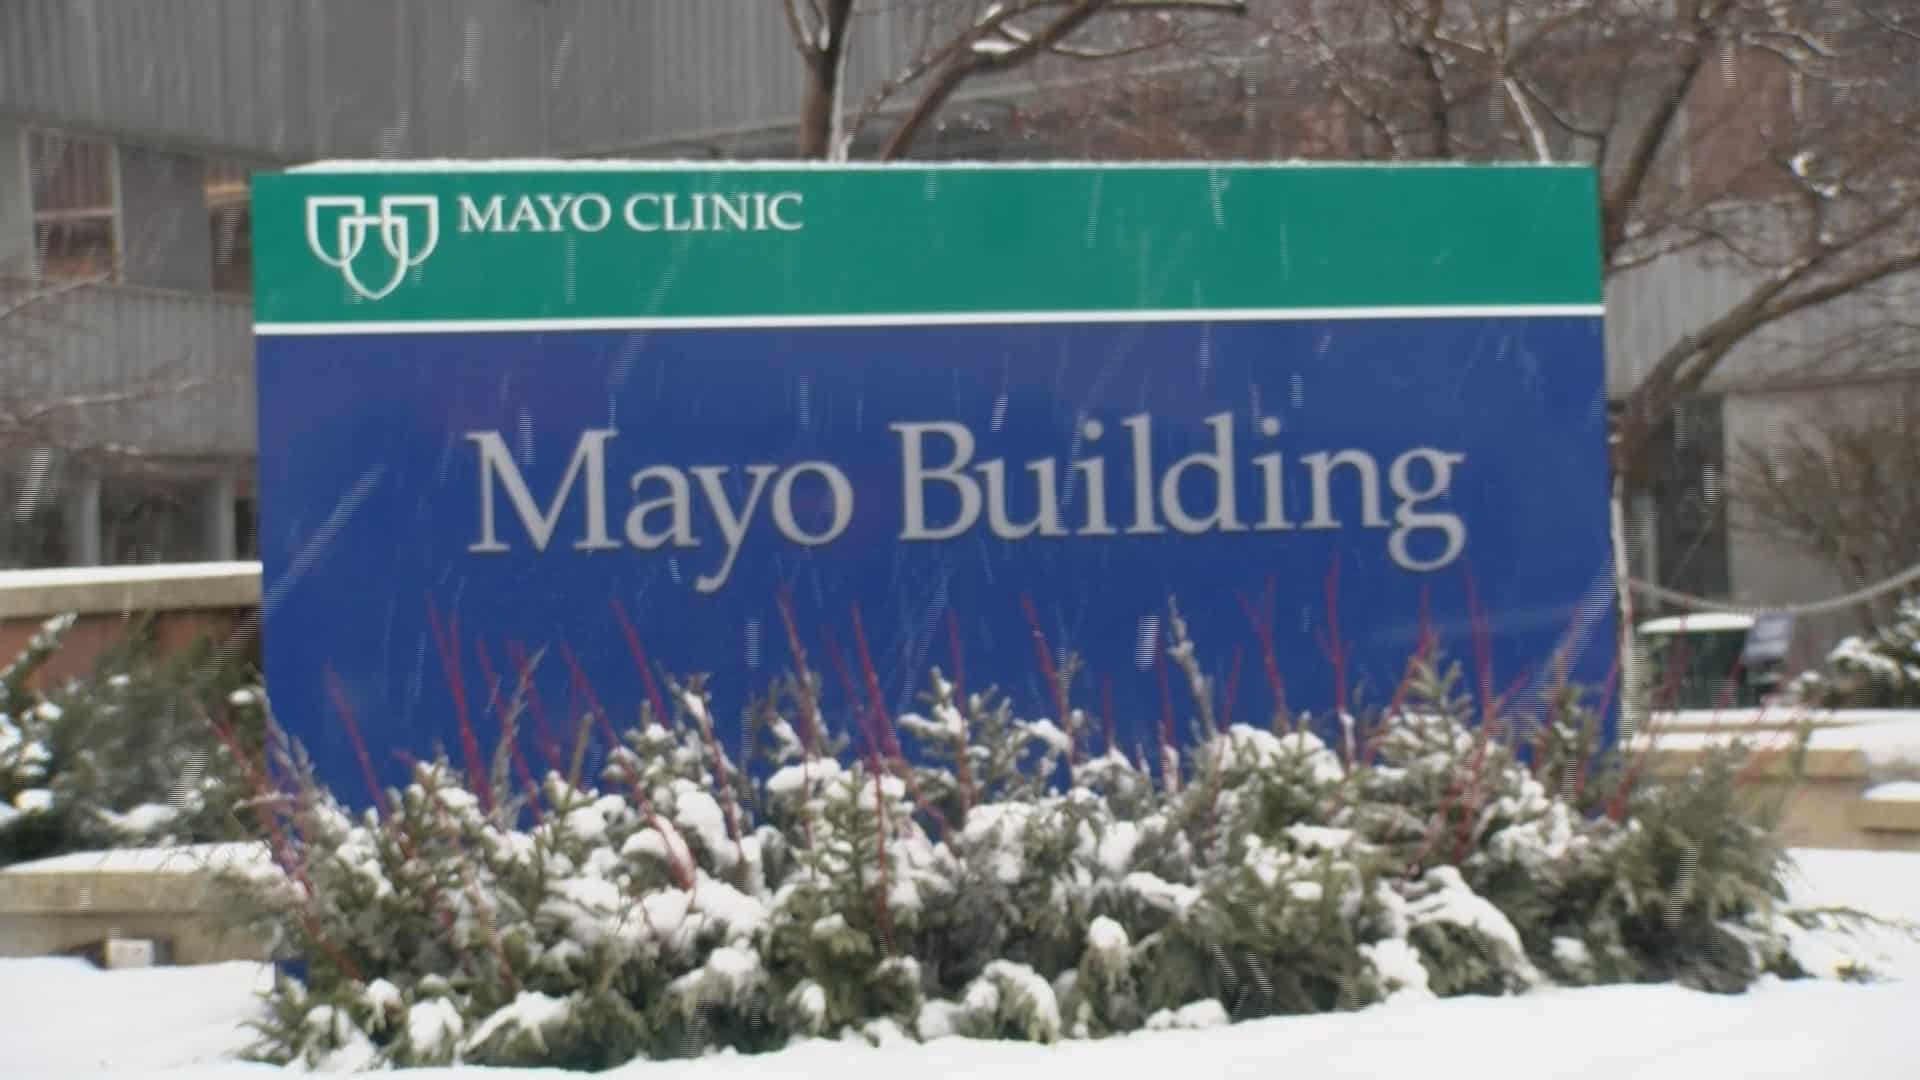 Mayo Clinic Mayo Building Sign